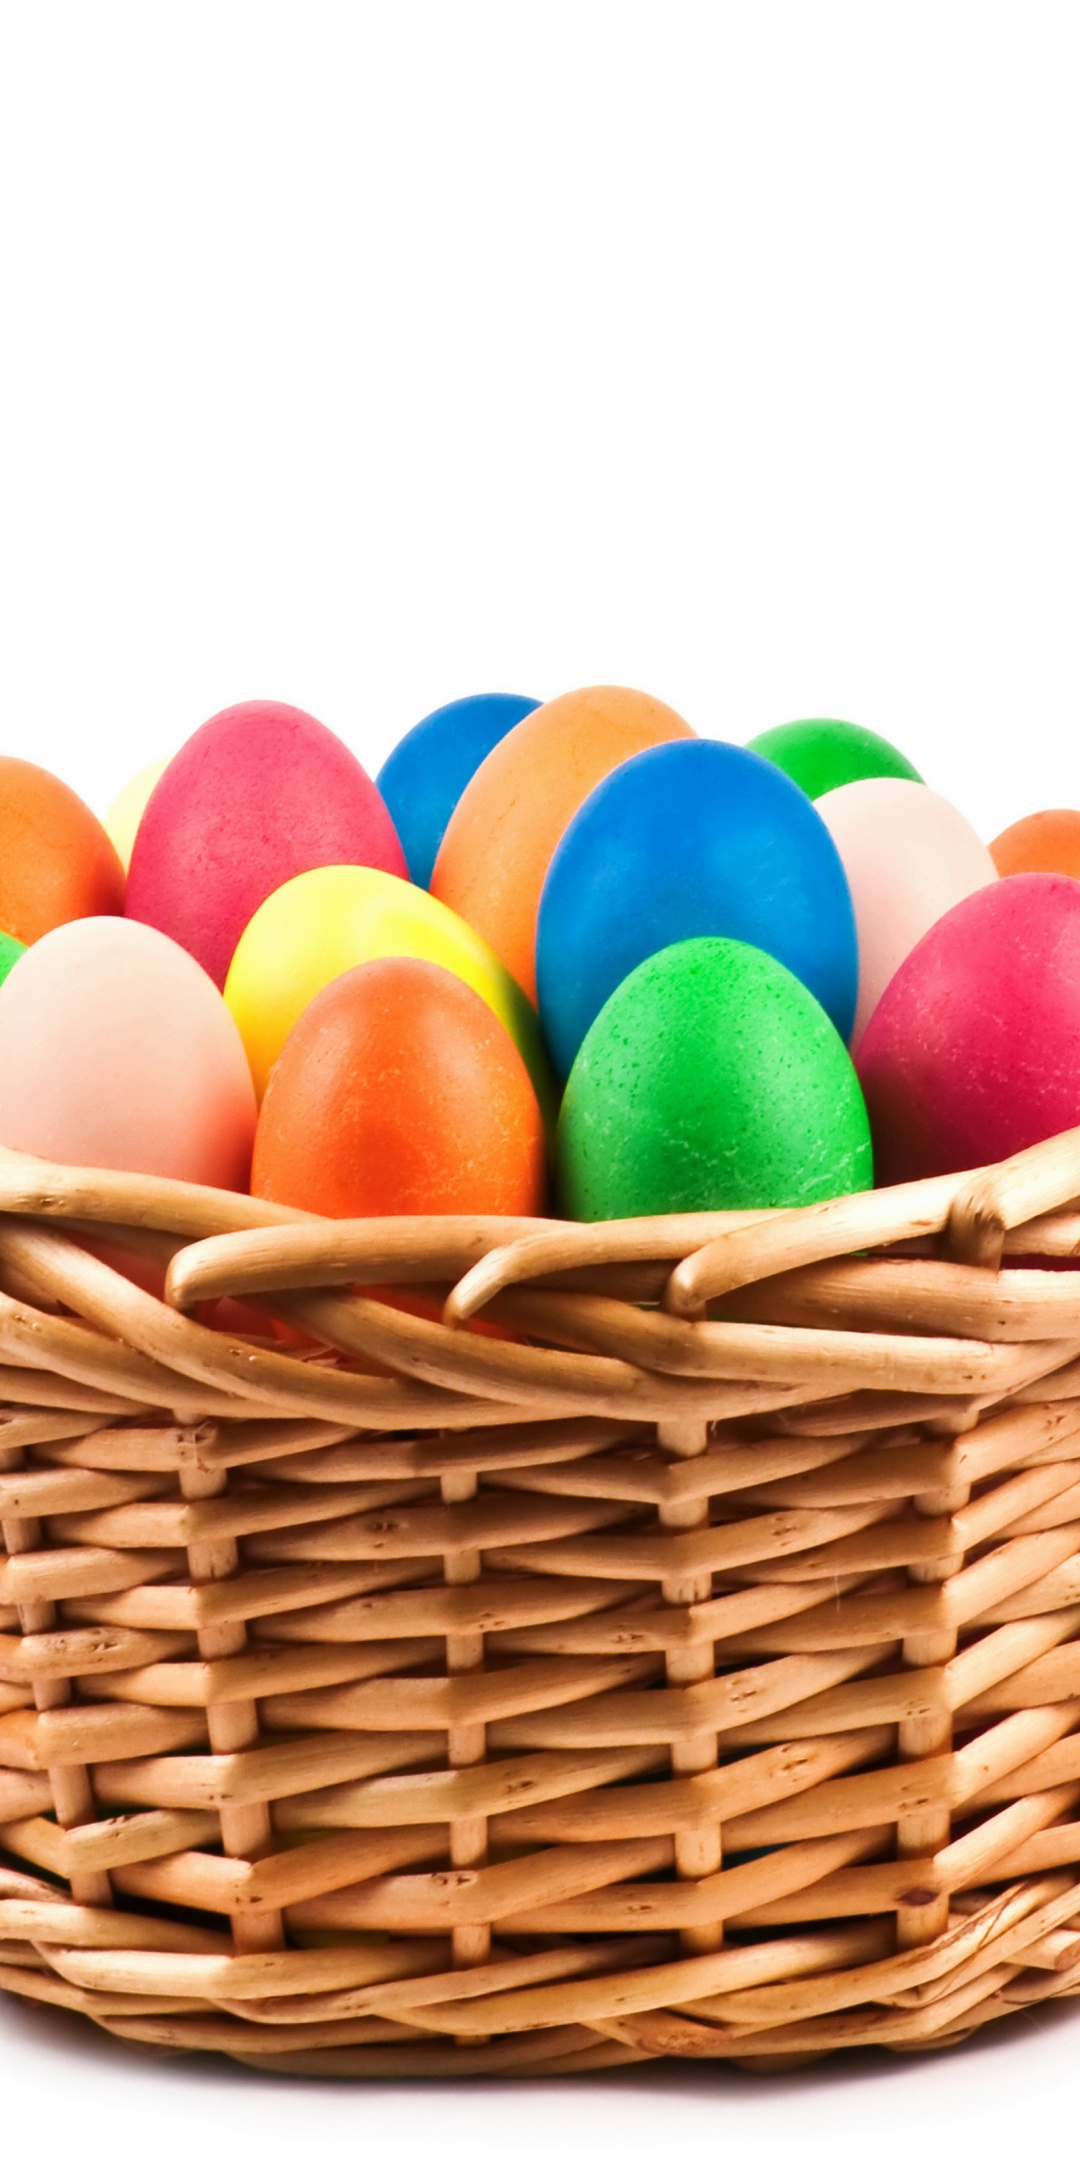 Holidays Easter Eggs Wicker Basket